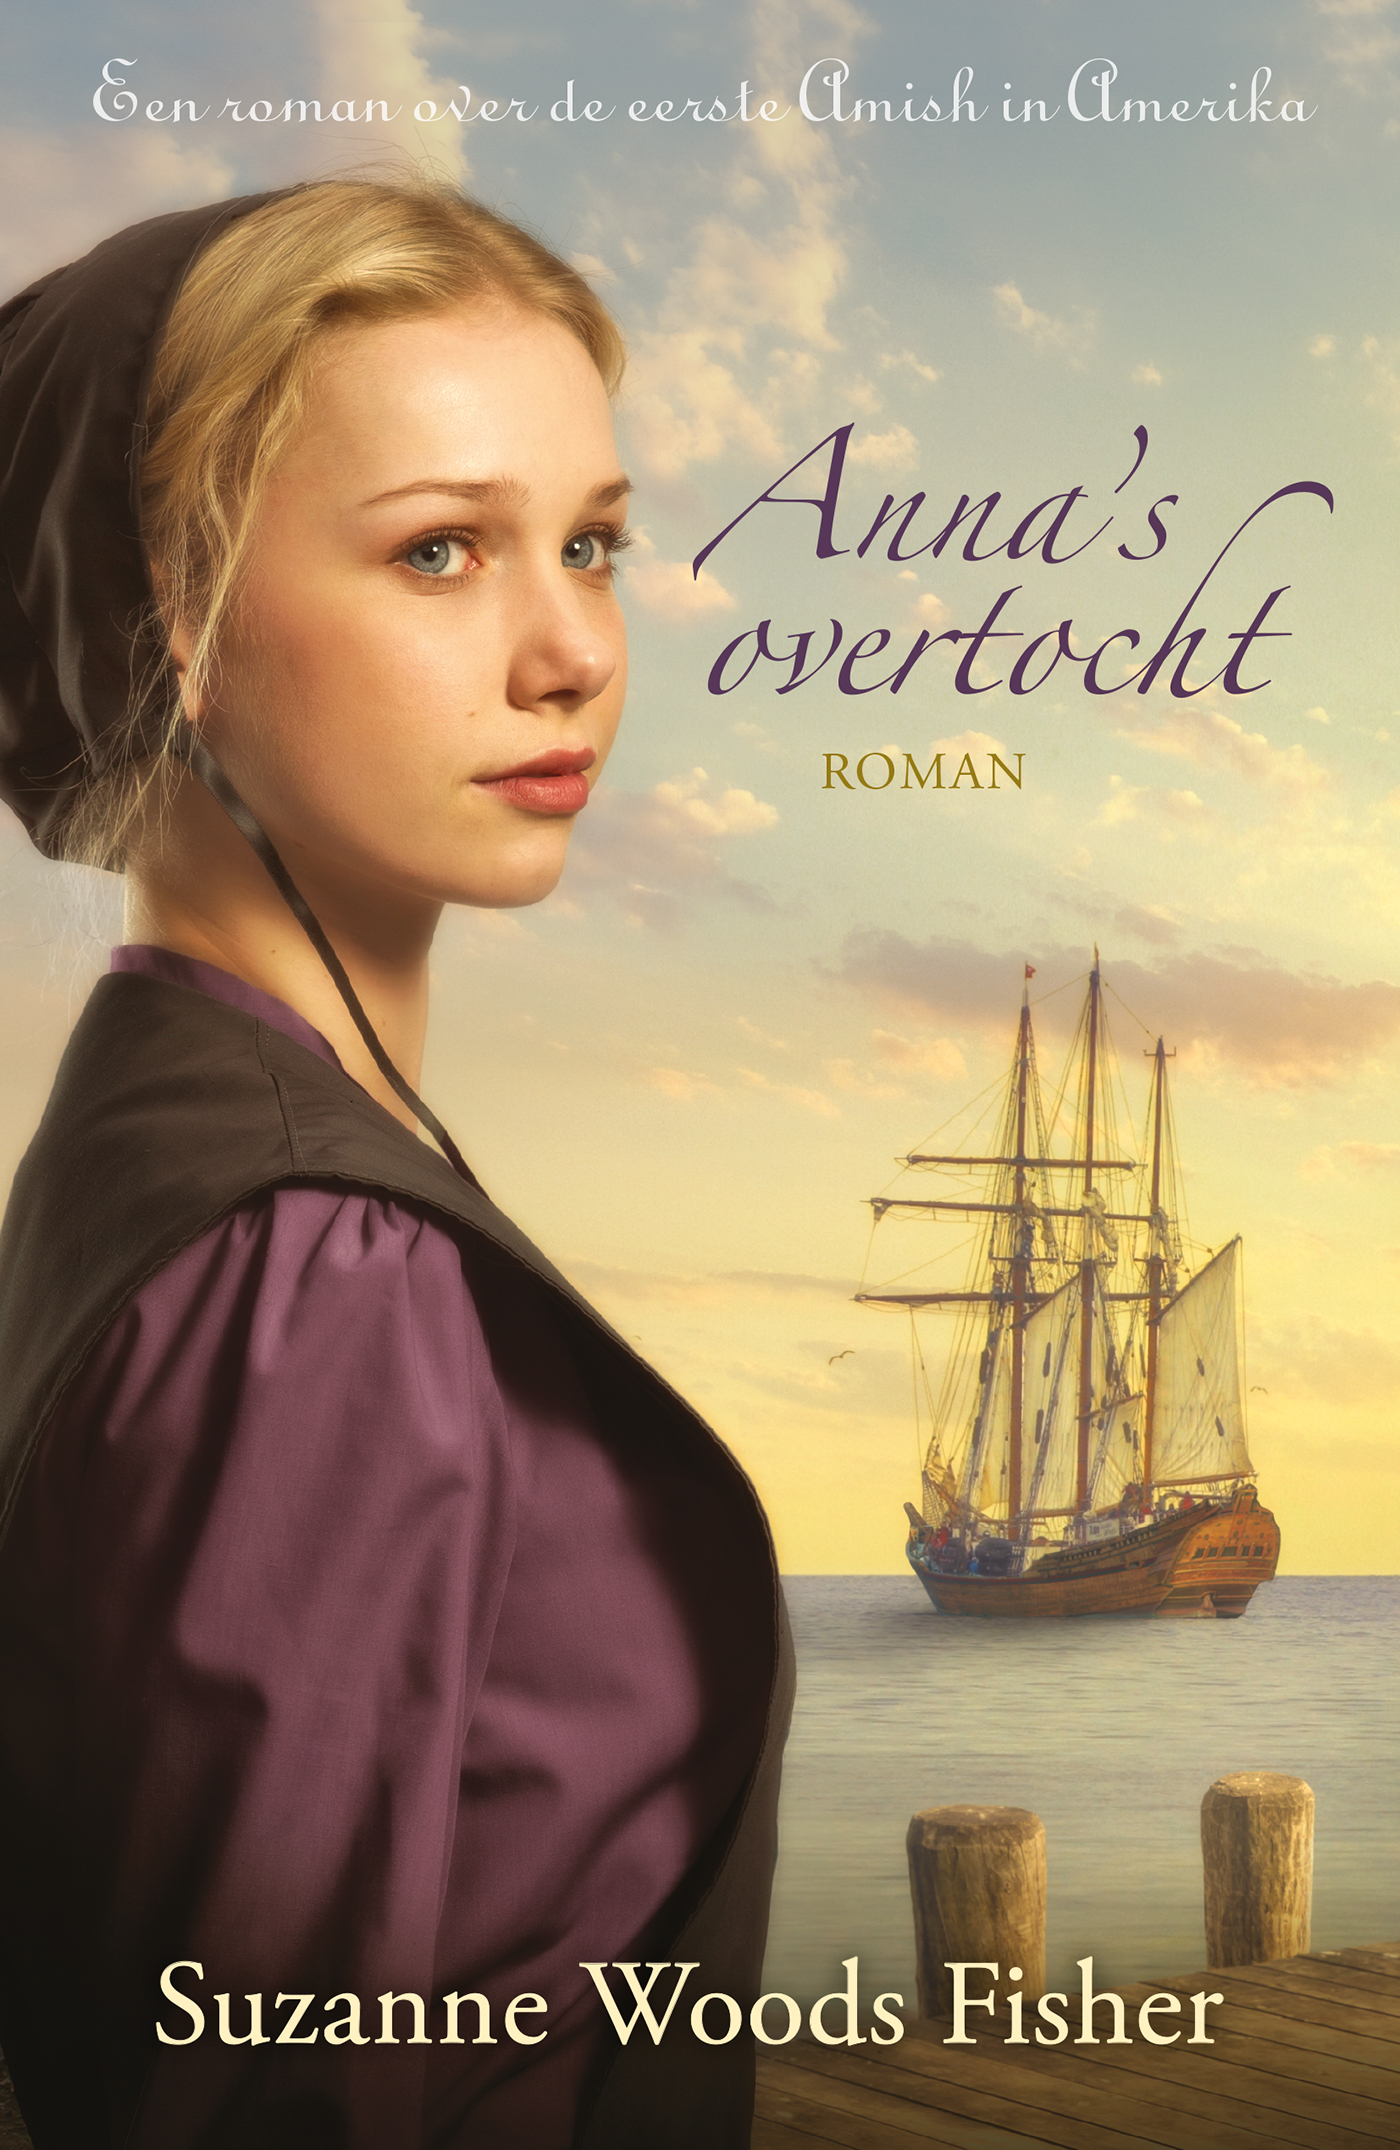 Anna's overtocht (Ebook)